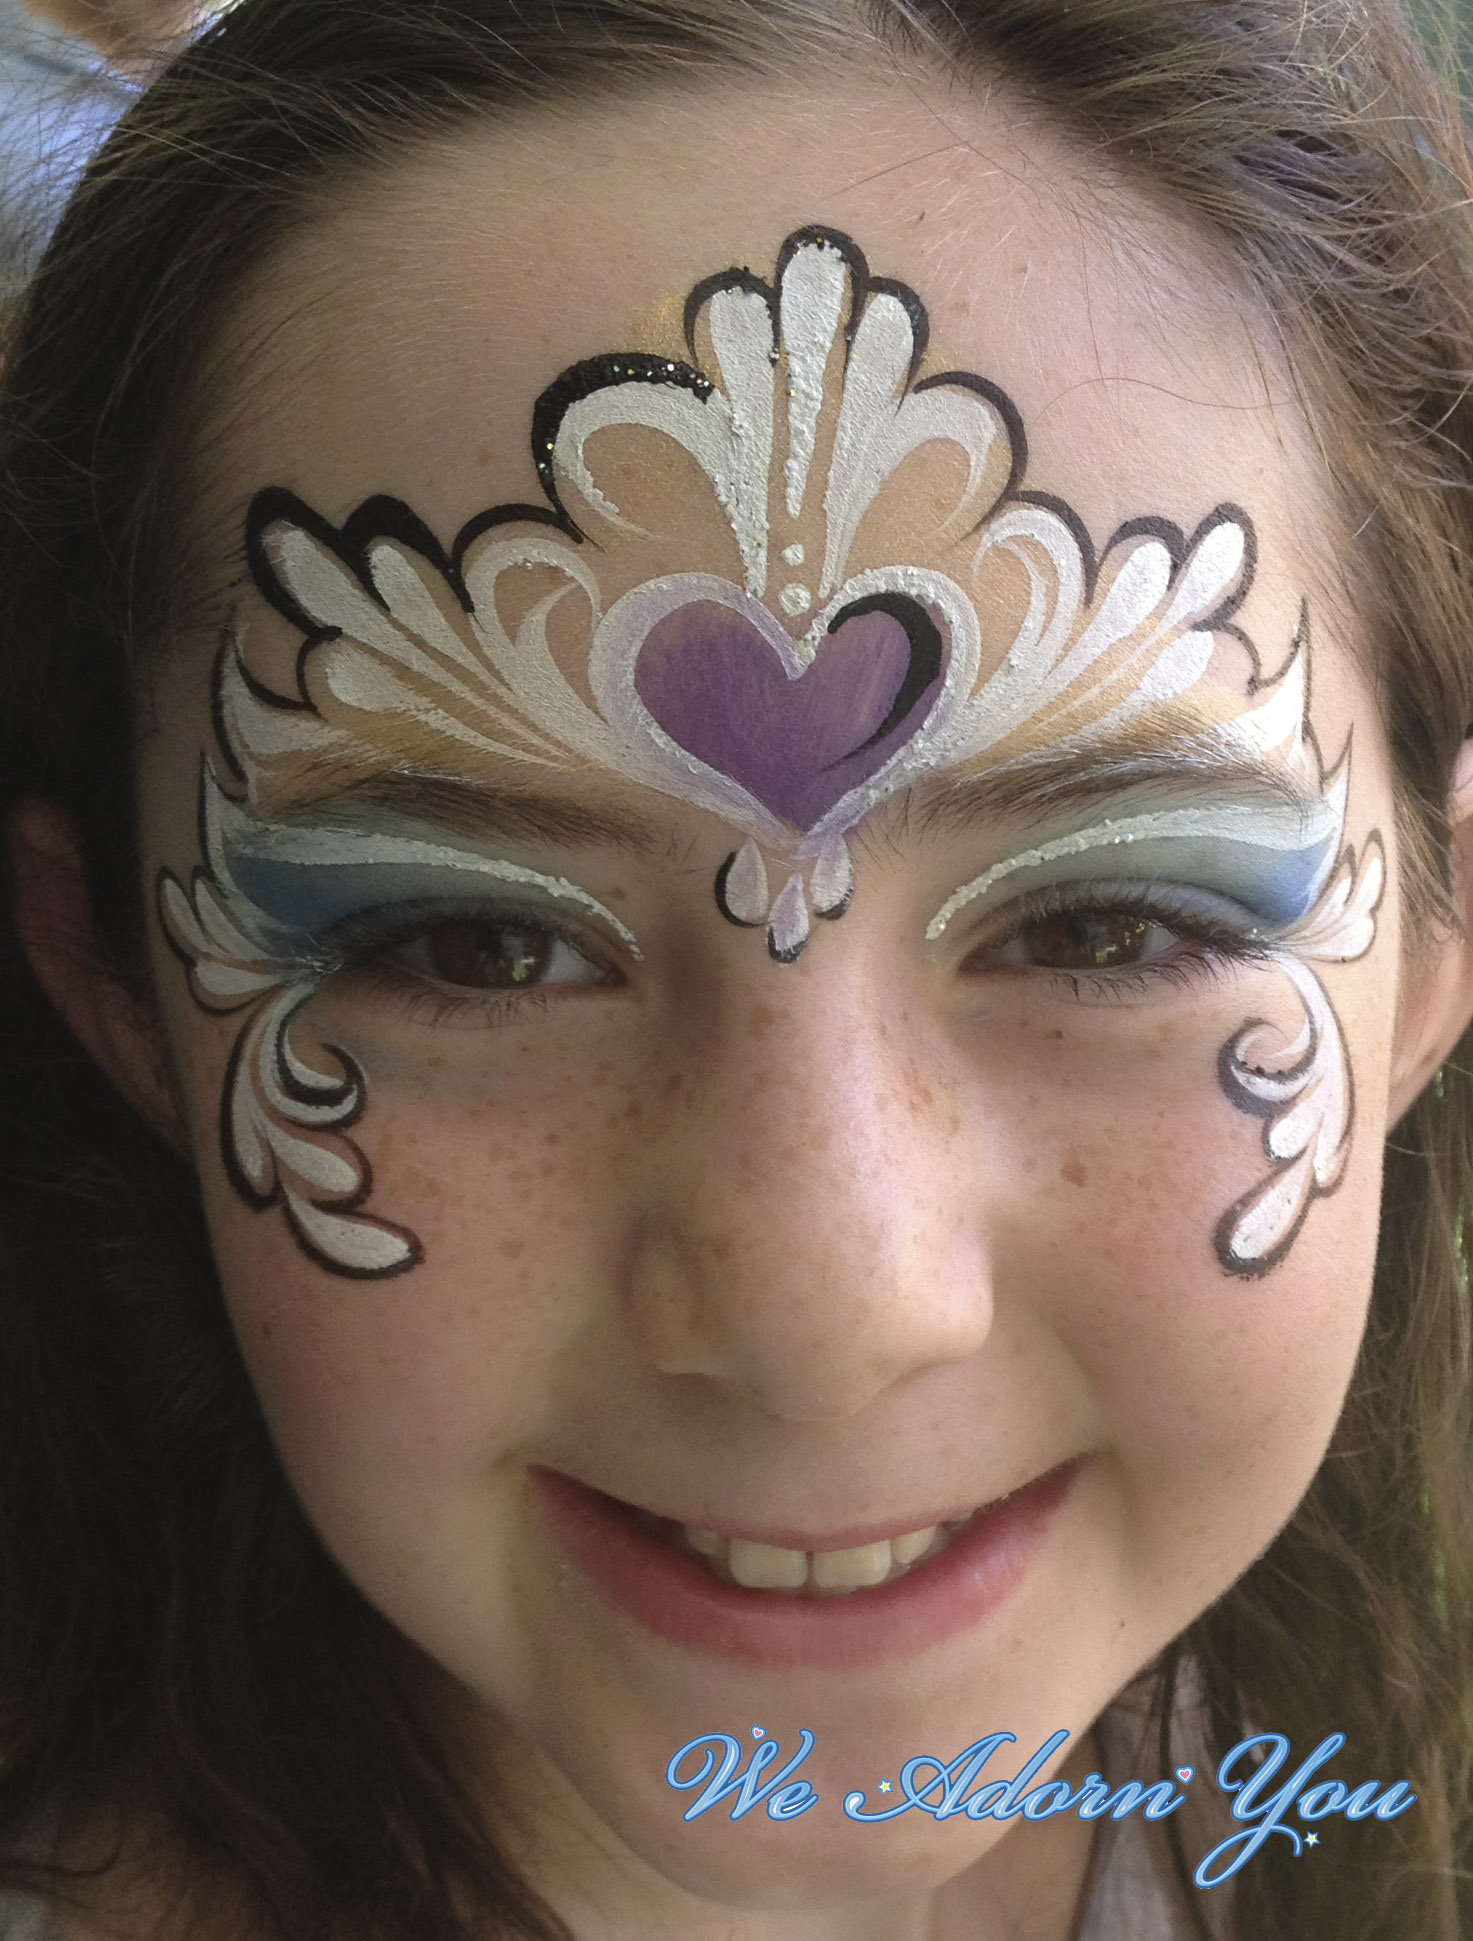 Face Painting Heart Princess - We Adorn You.jpg